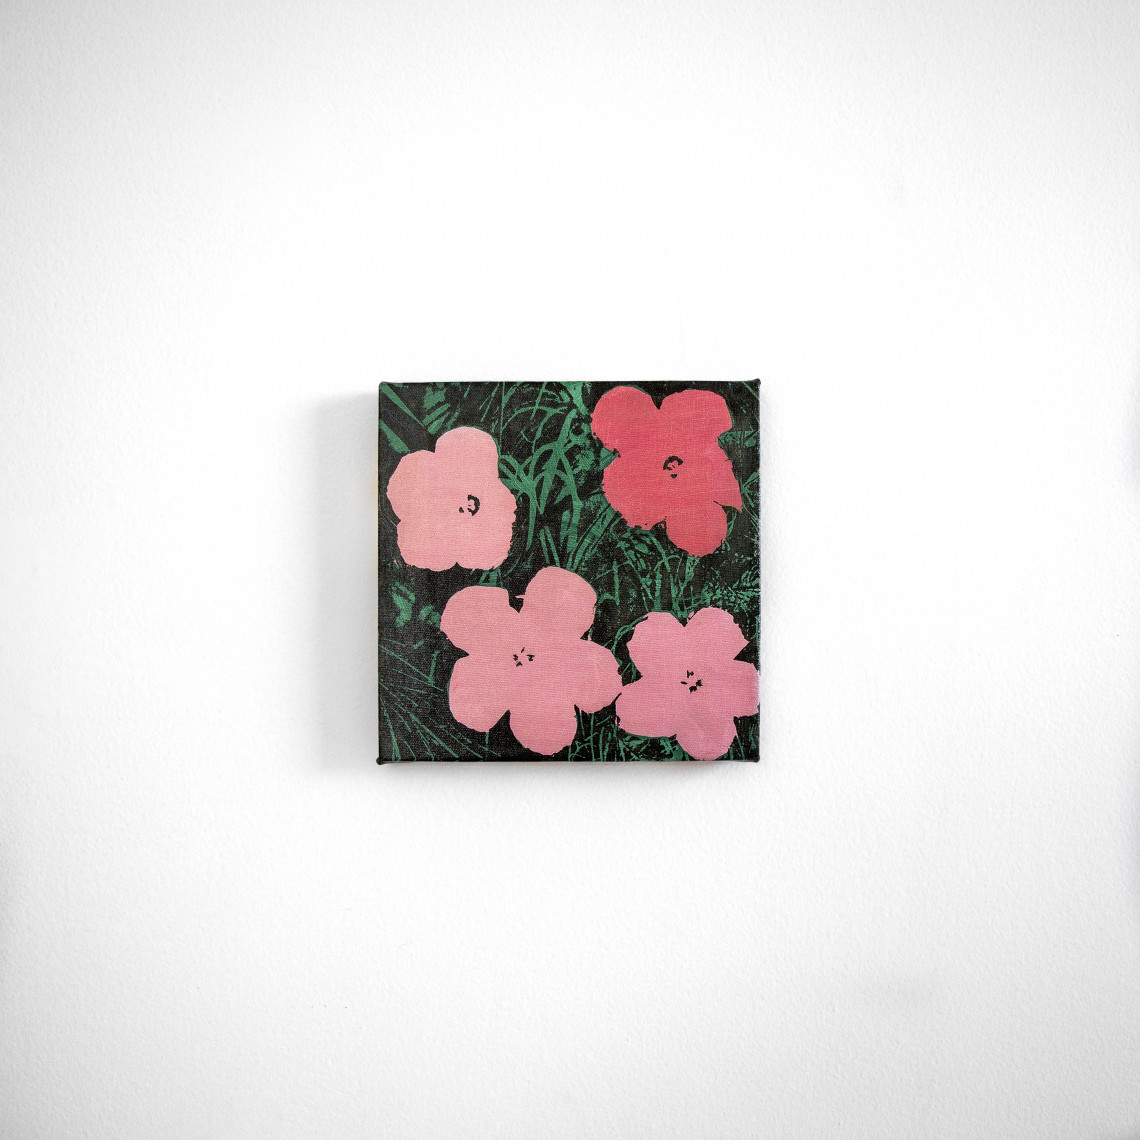  - Sturtevant Study for Warhol Flowers (Étude I)